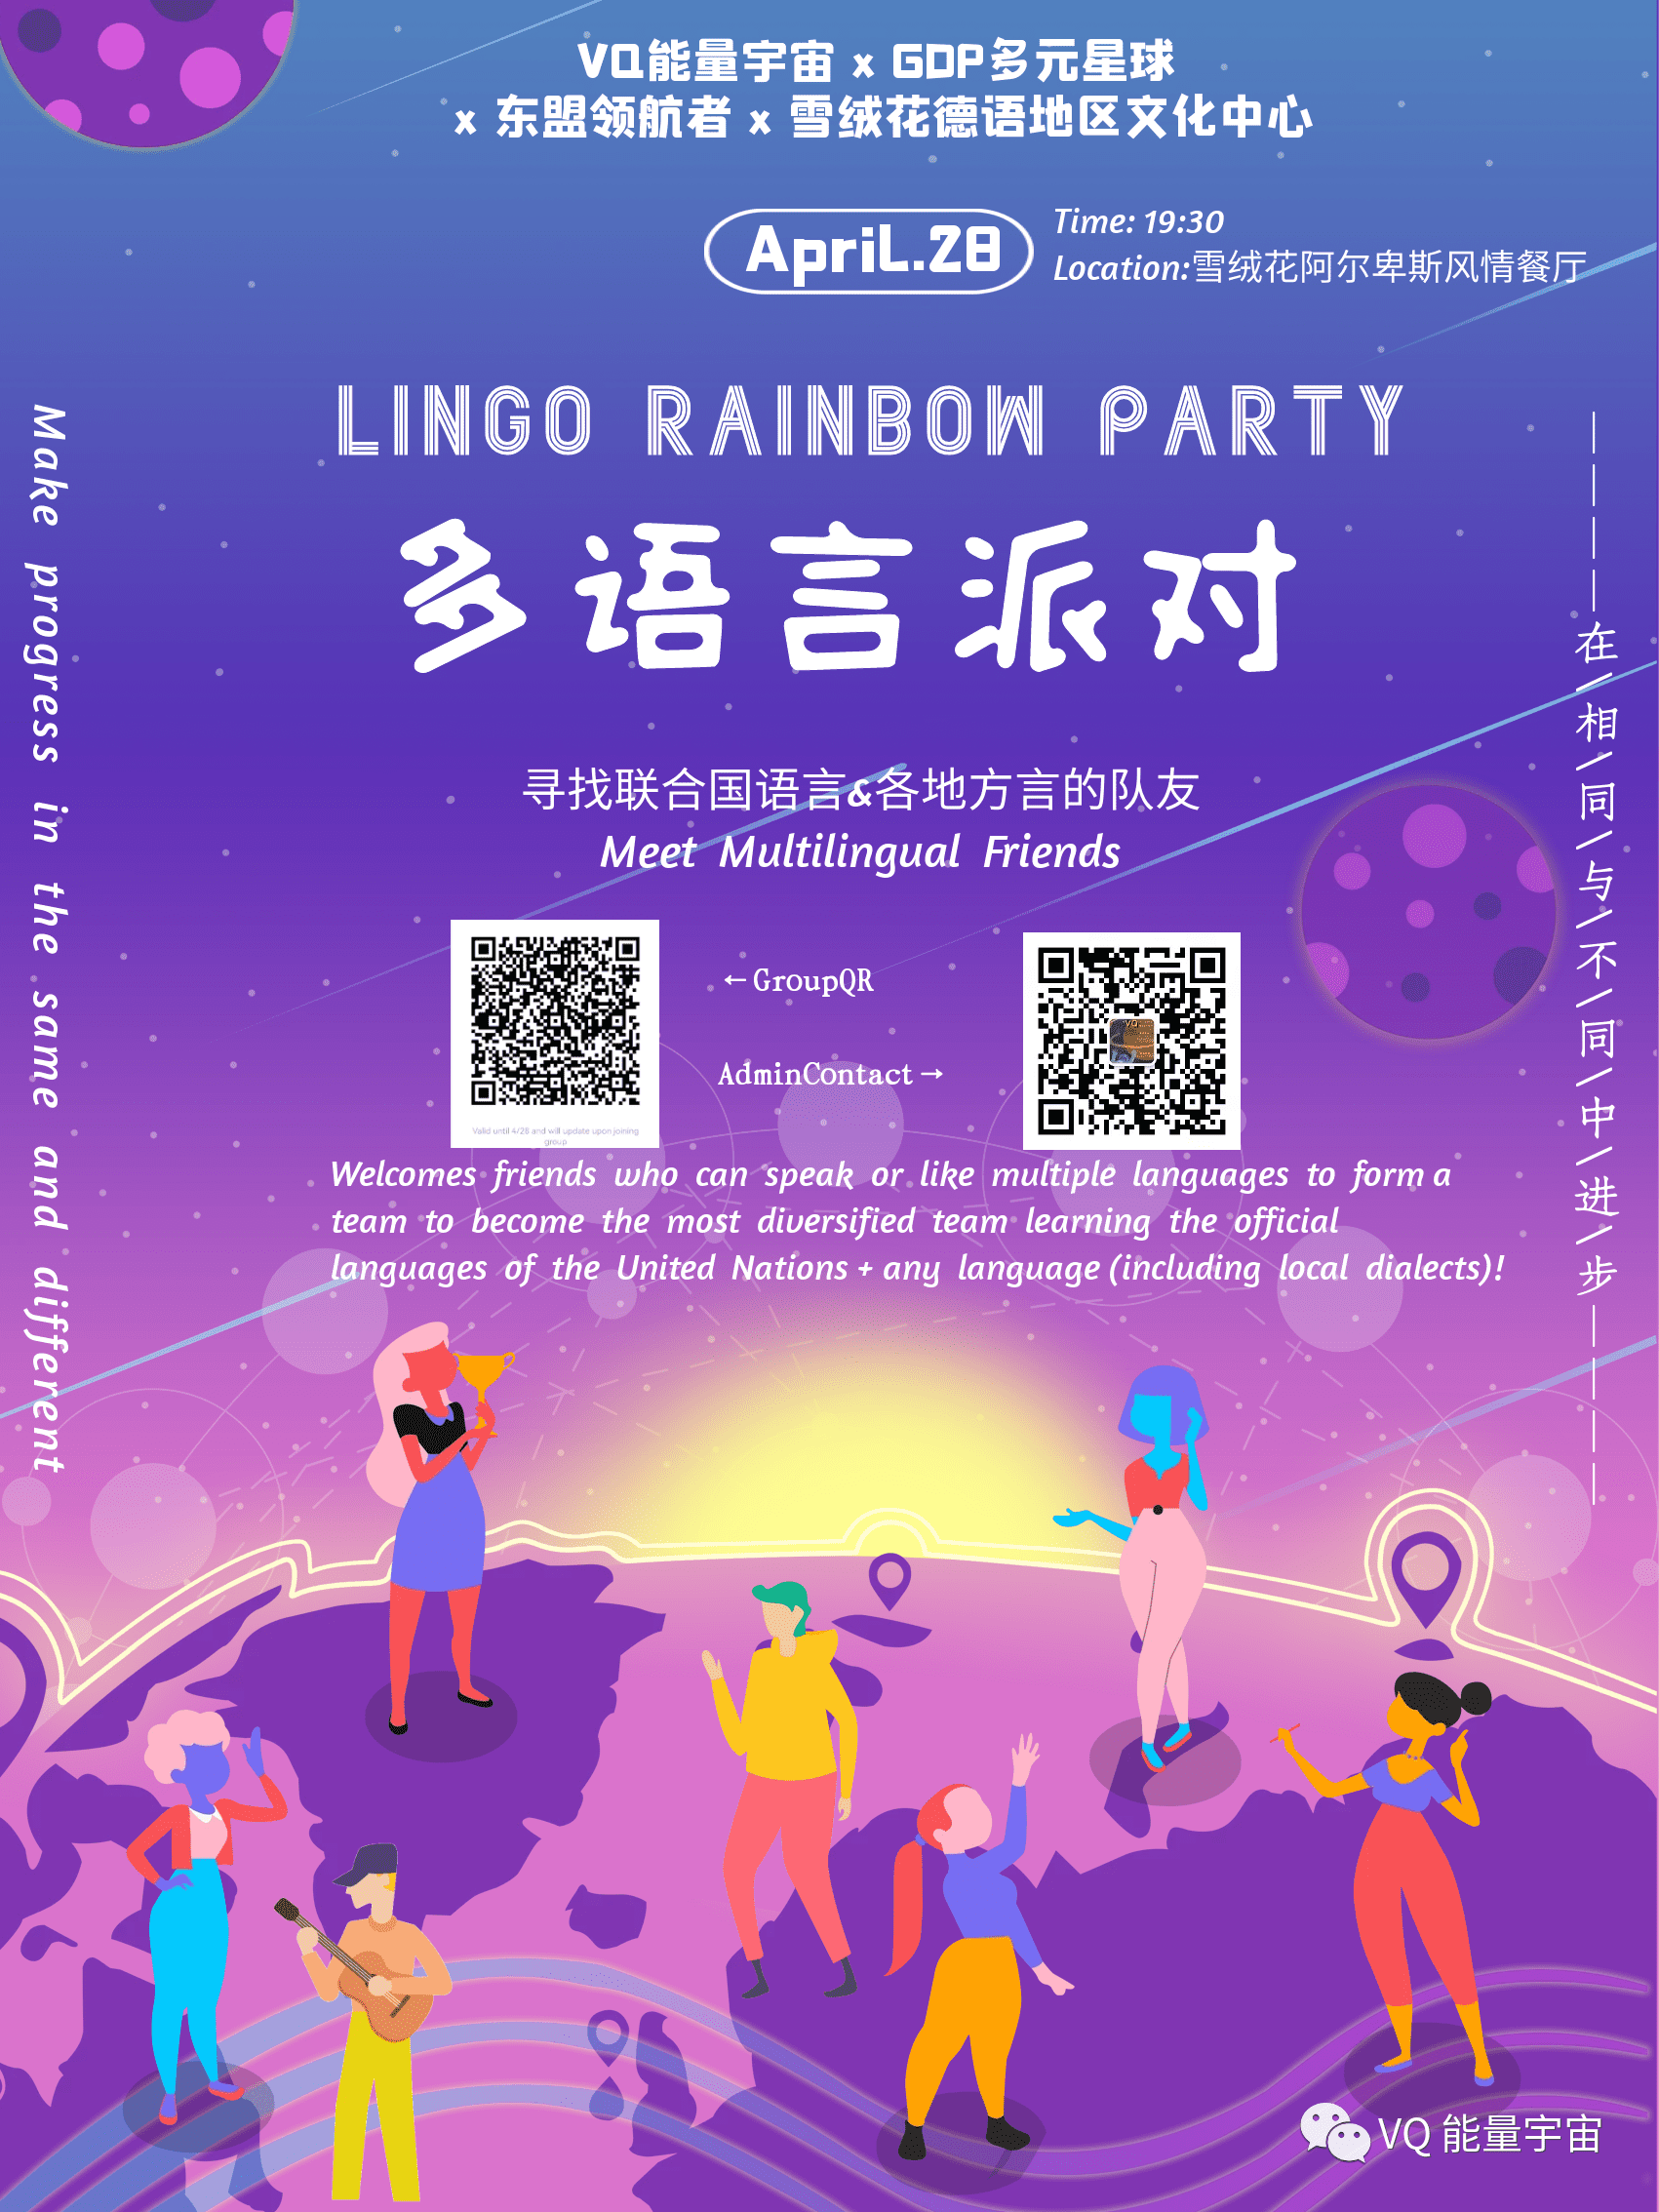 4.28 Lingo Rainbow Party•Meet Multilingual Friends